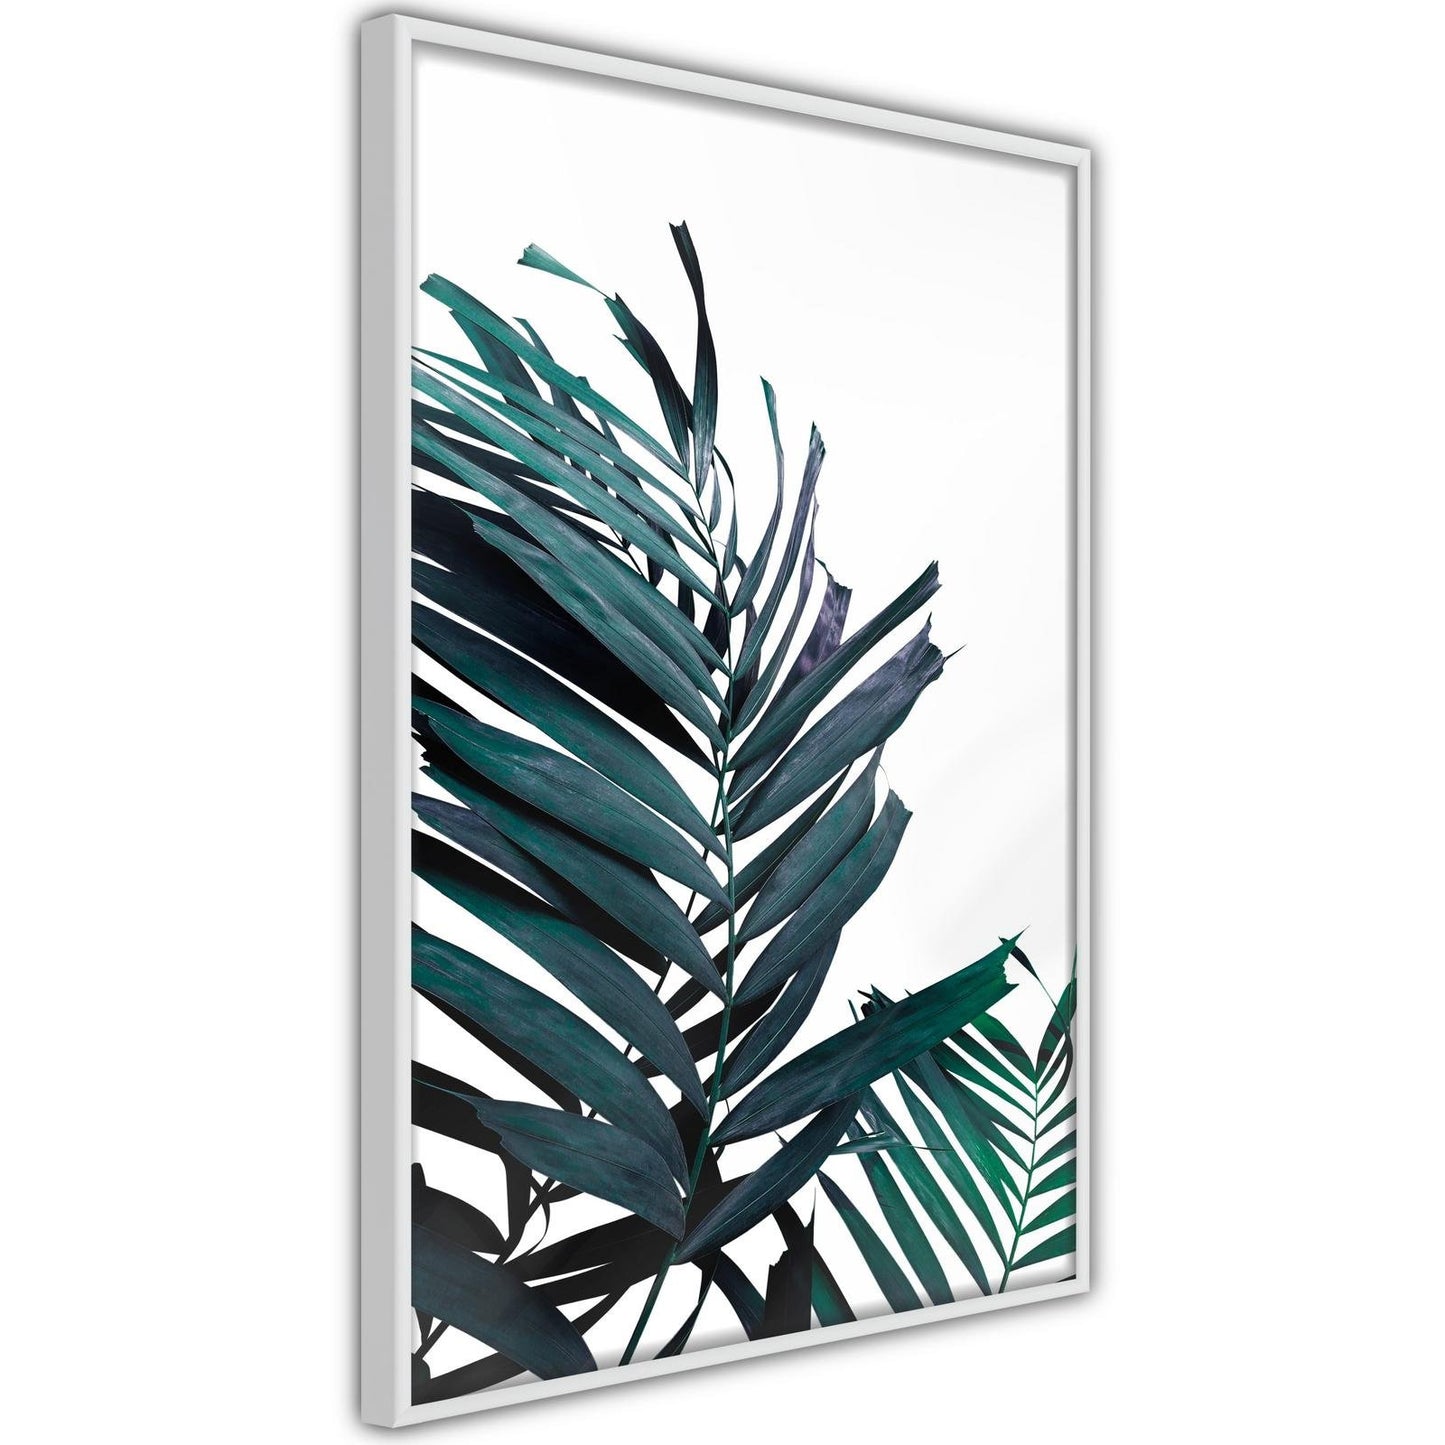 Immergrüne Palmblätter